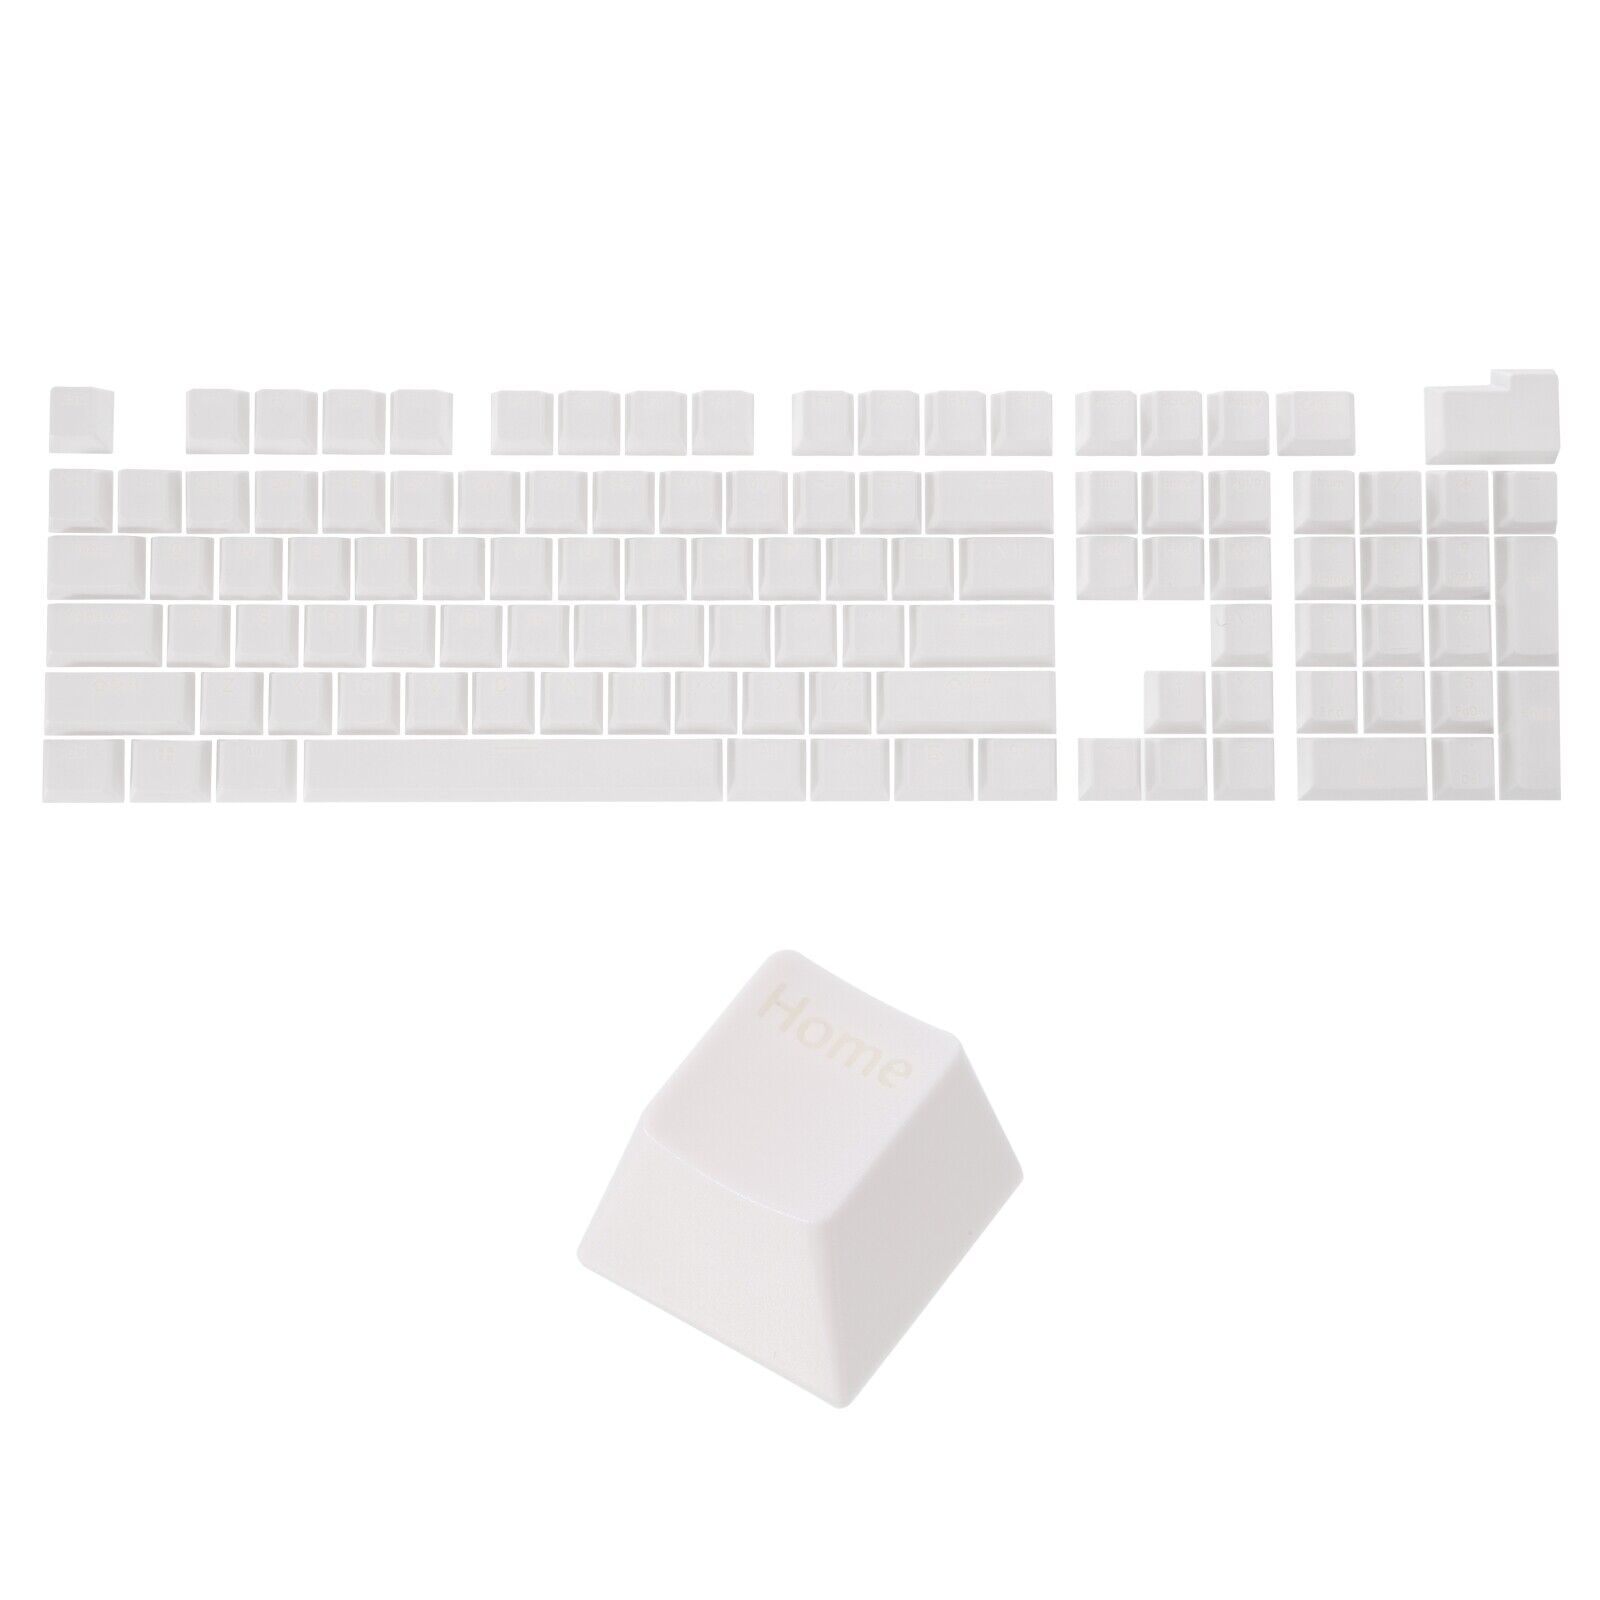 108 Keys Pudding Keycaps Set ABS for Mechanical Keyboard Layout, Cream White